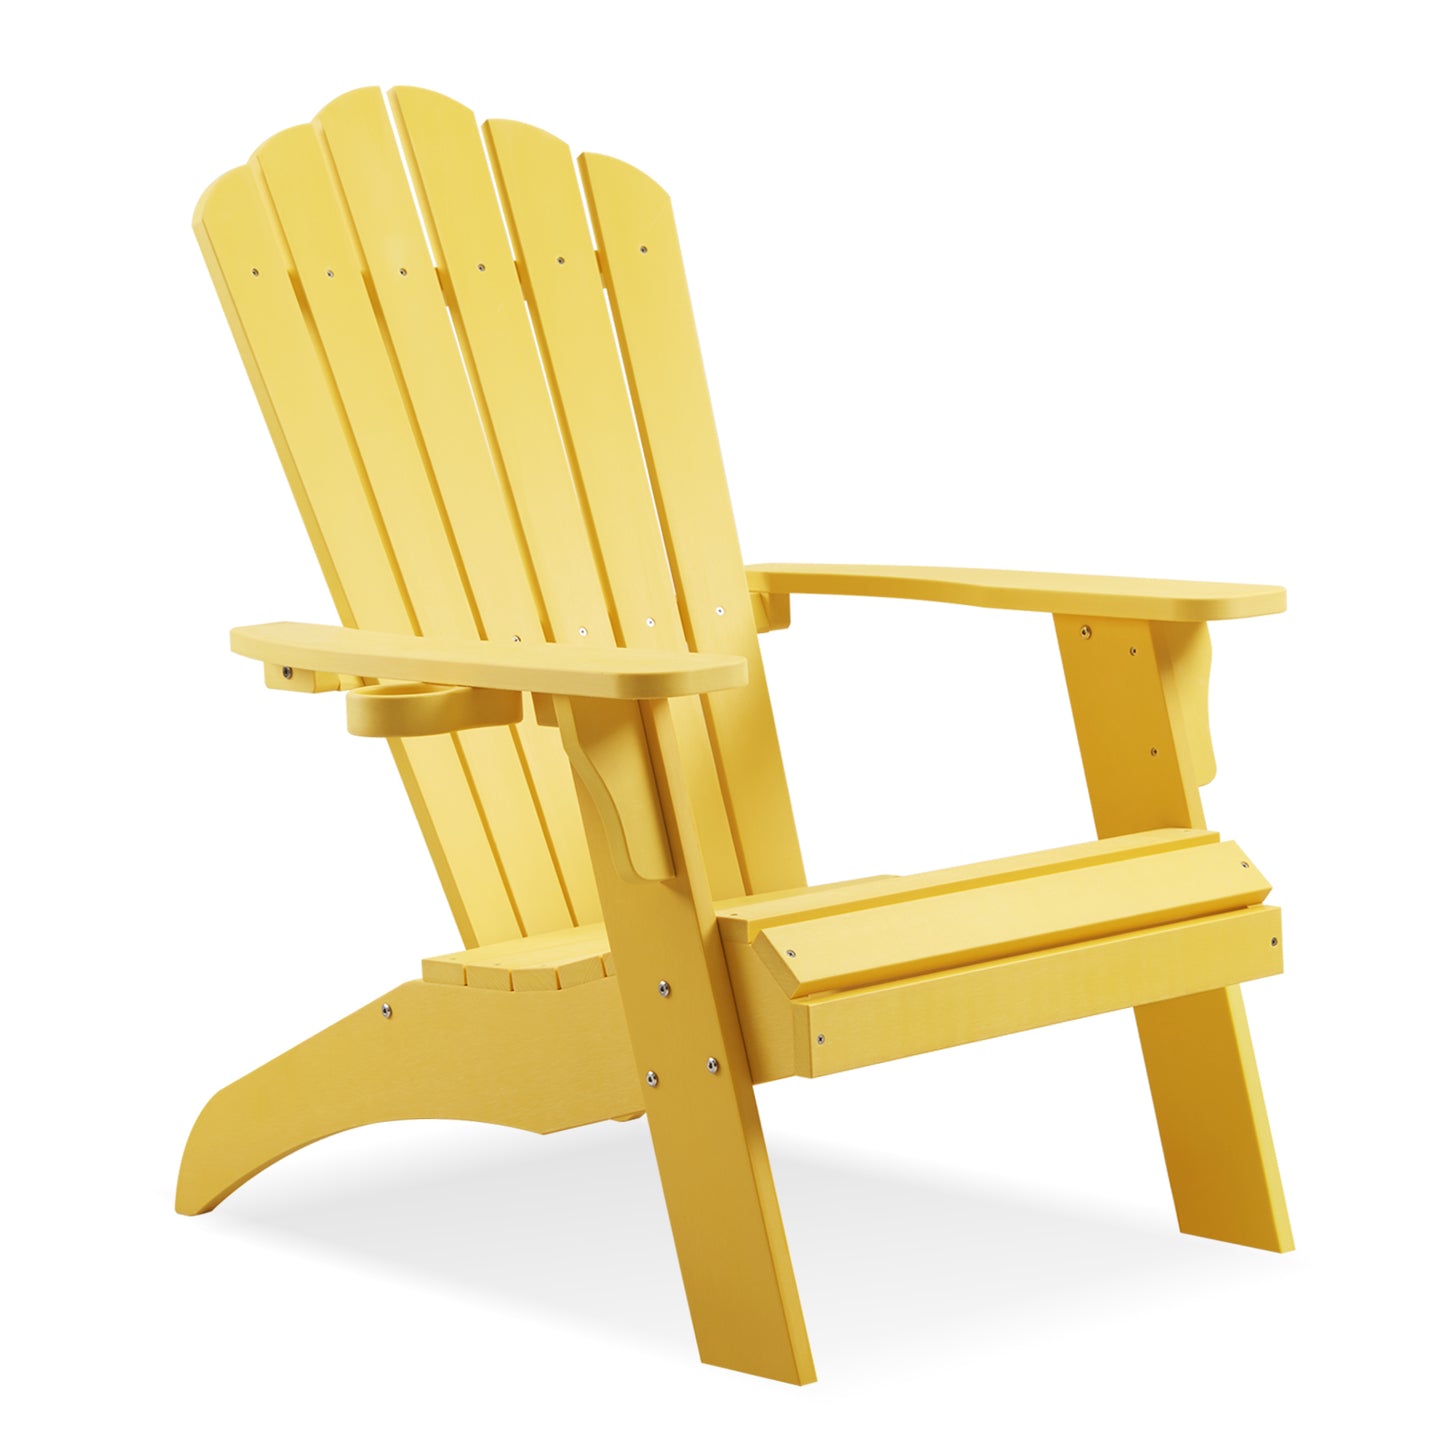 Psilvam Poly Lumber Adirondack Chairs